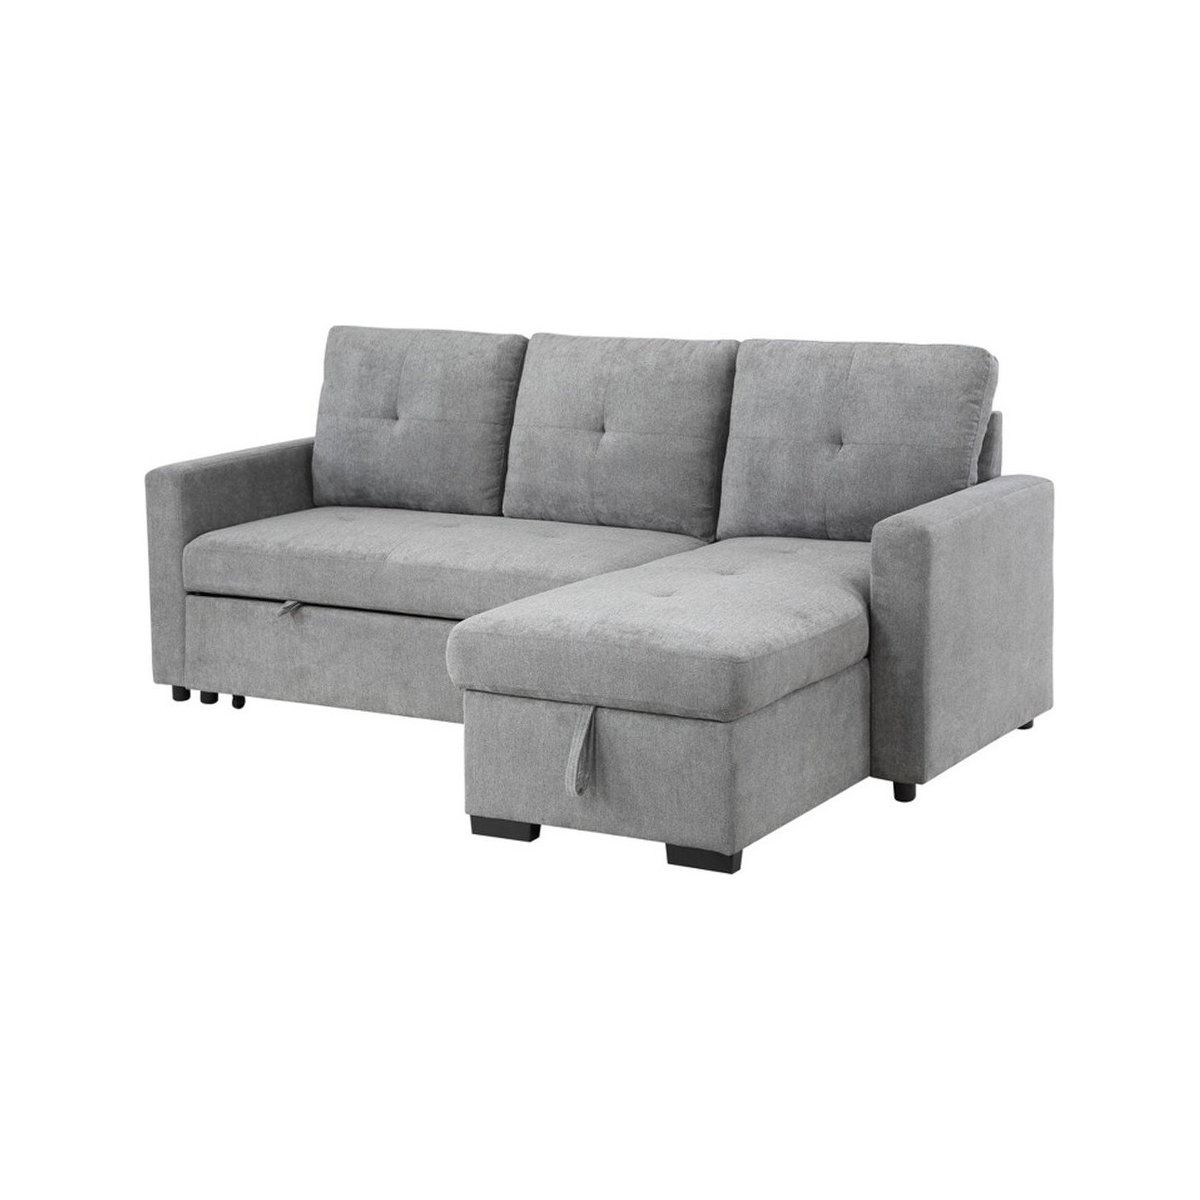 The Versatile Grey Sectional Sleeper Sofa: A Stylish and Comfortable Seating Option